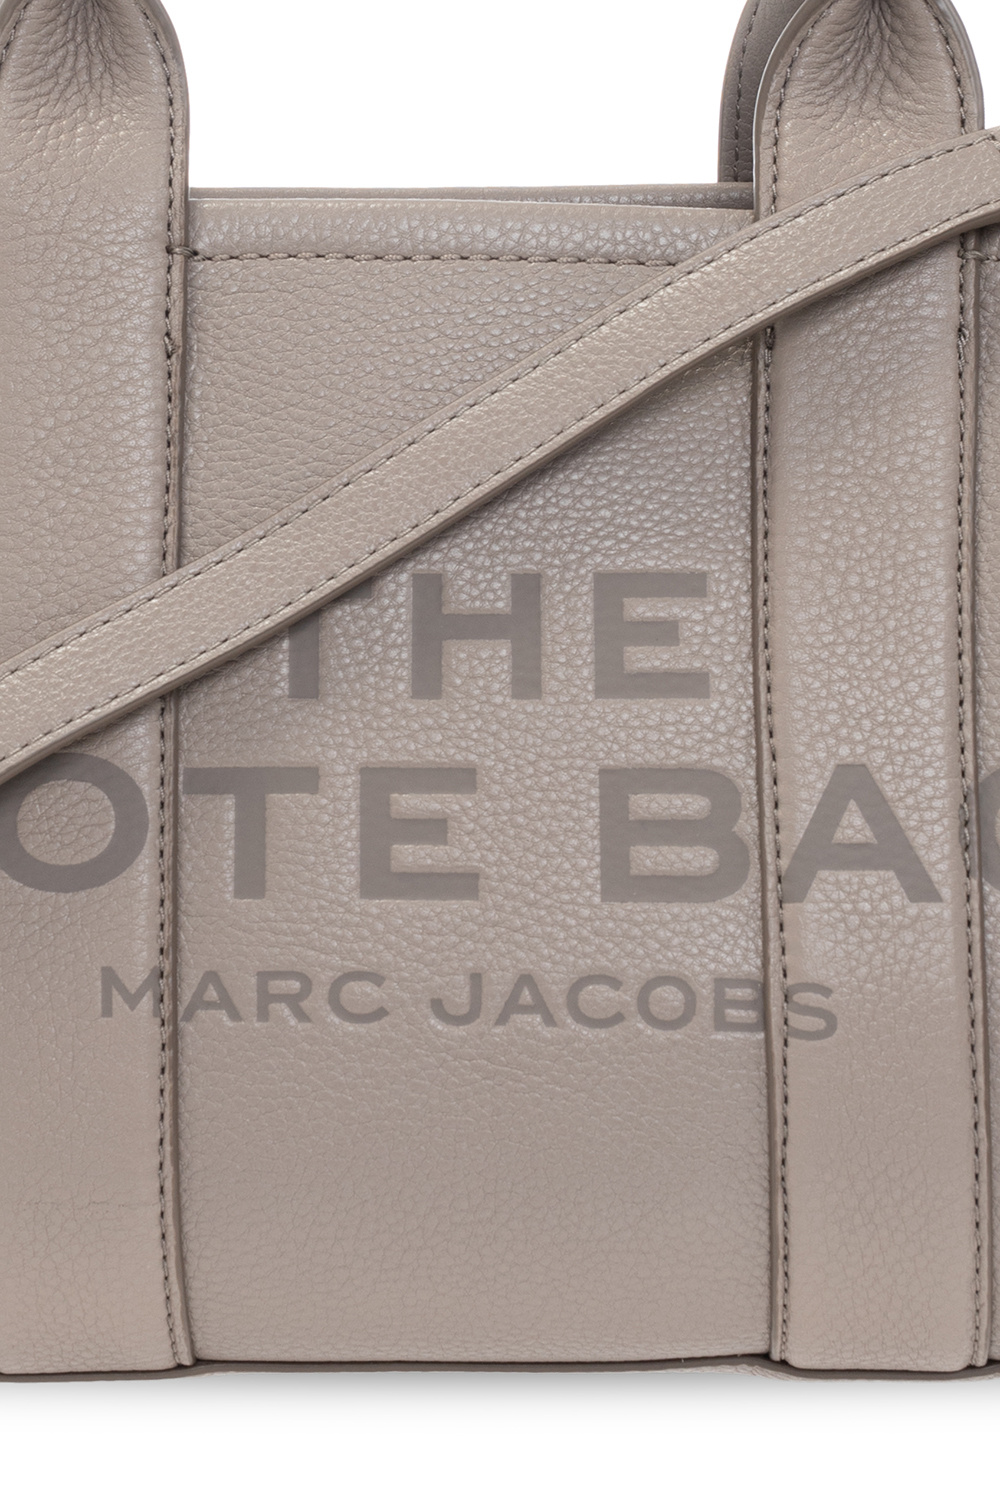 Marc Jacobs (The) ‘The Tote Bag’ shoulder bag